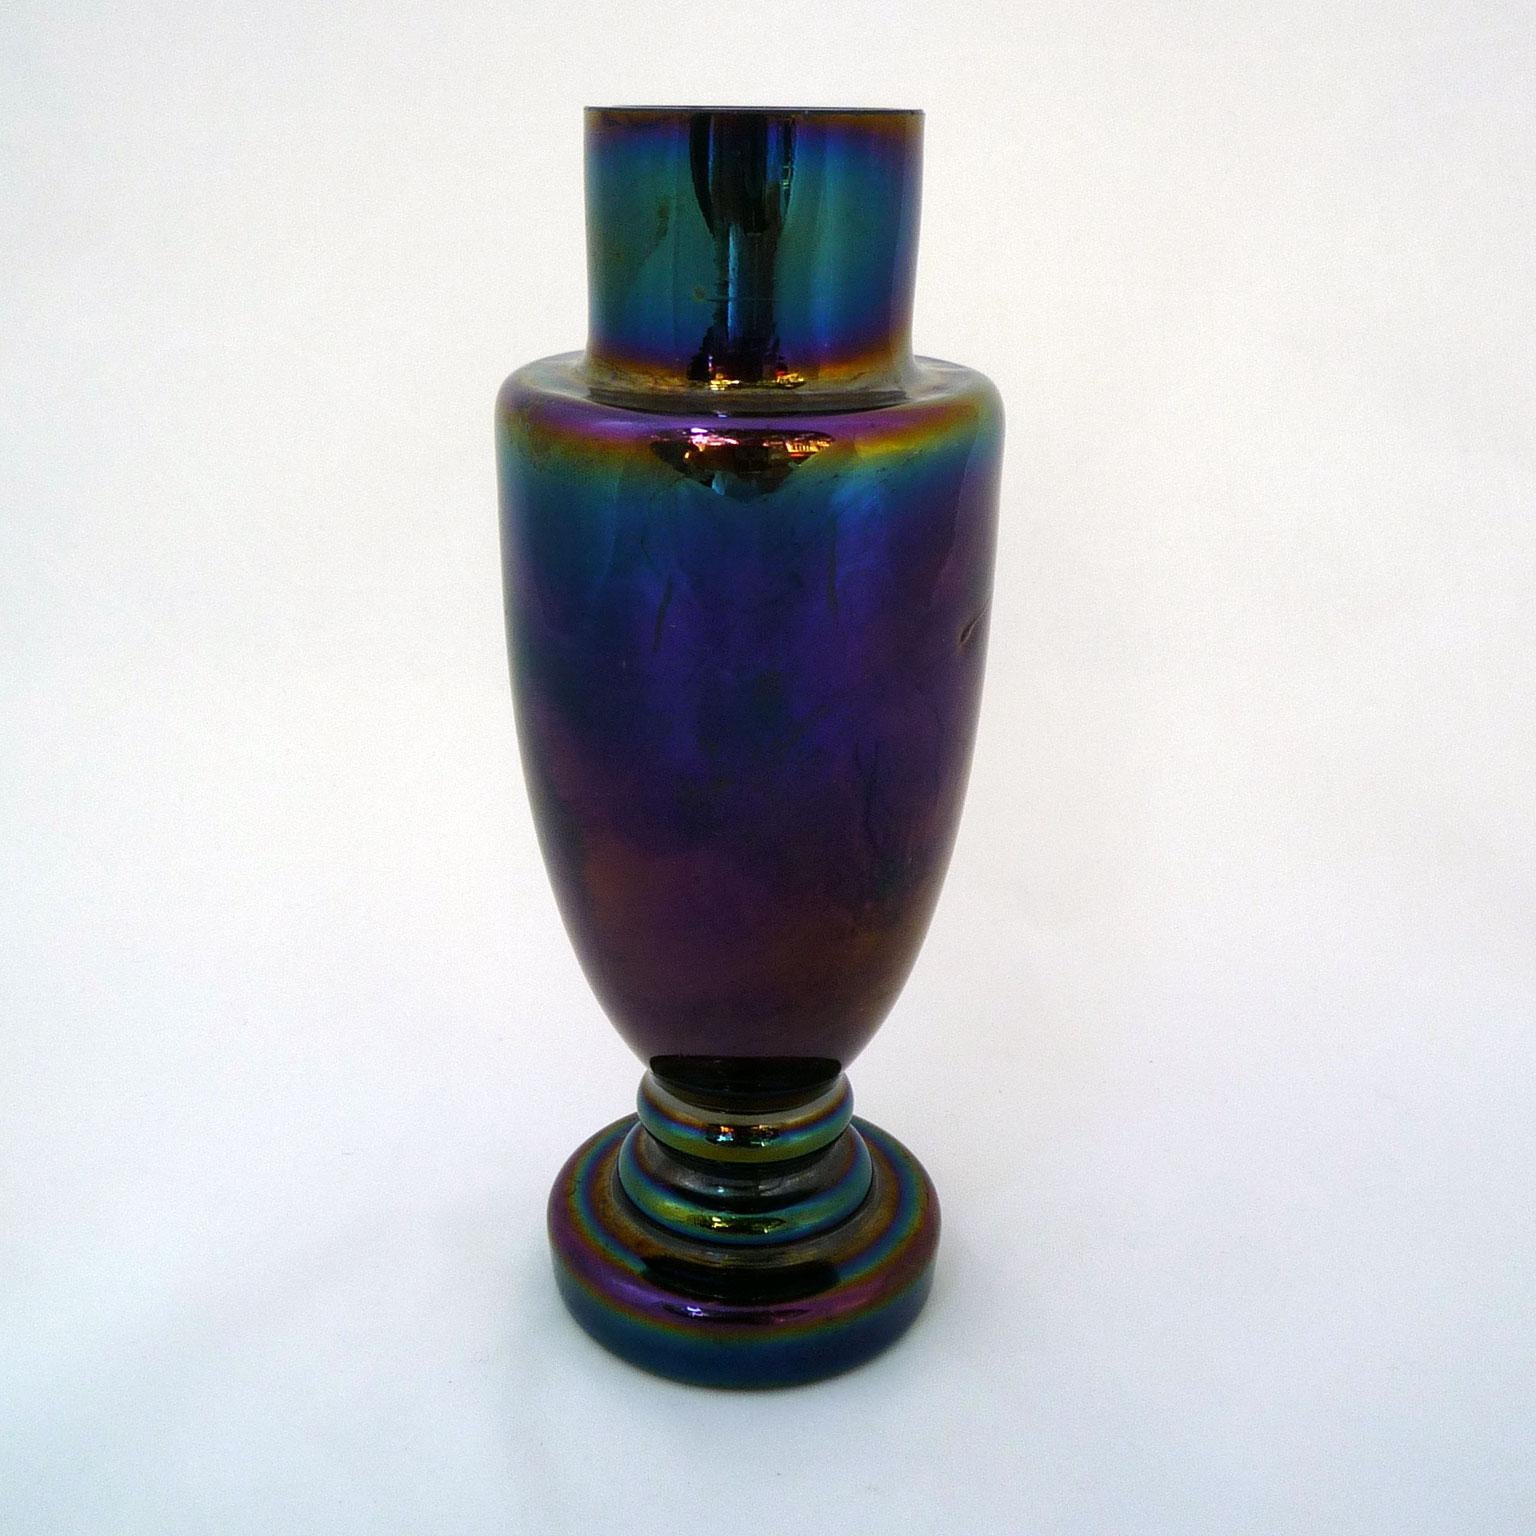 Small vase in Style of the company Loetz Bohemia,
Iridescent glass in the plain design of Art deco
Bohemia, circa 1920.

Measures: D 5.8 cm
H 15 cm.